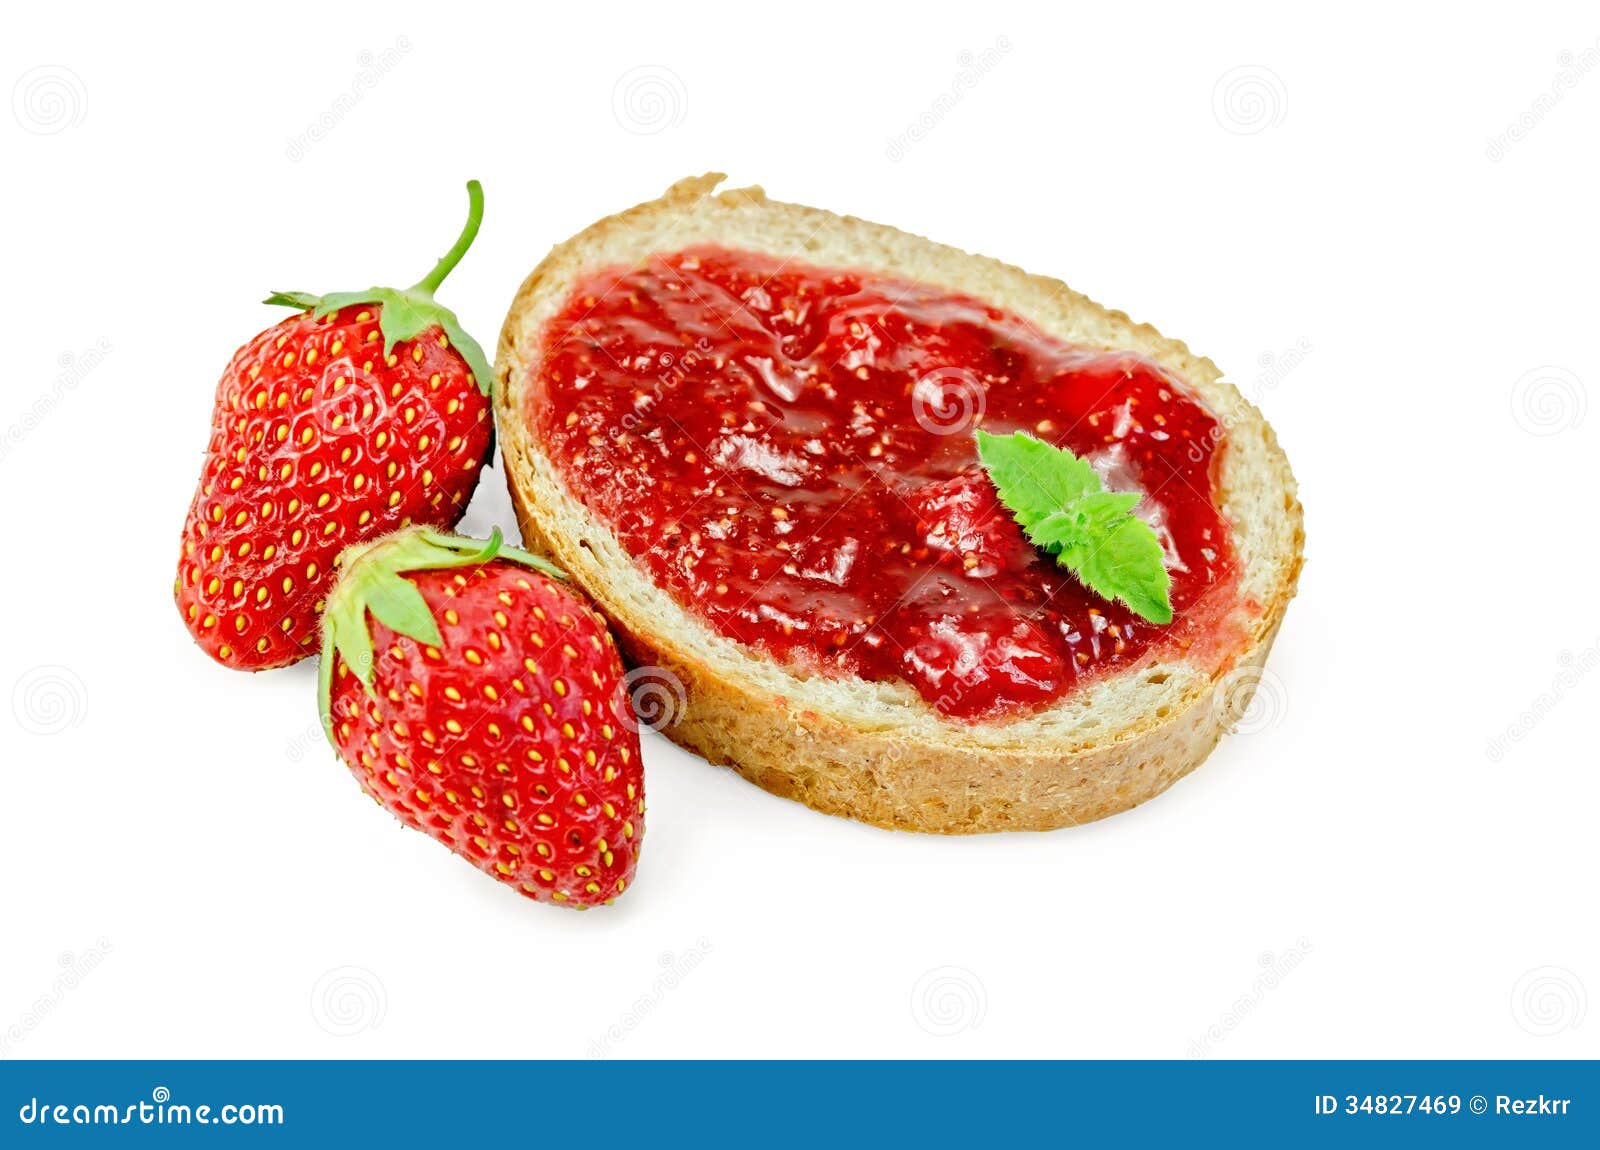 clipart strawberry jam - photo #50